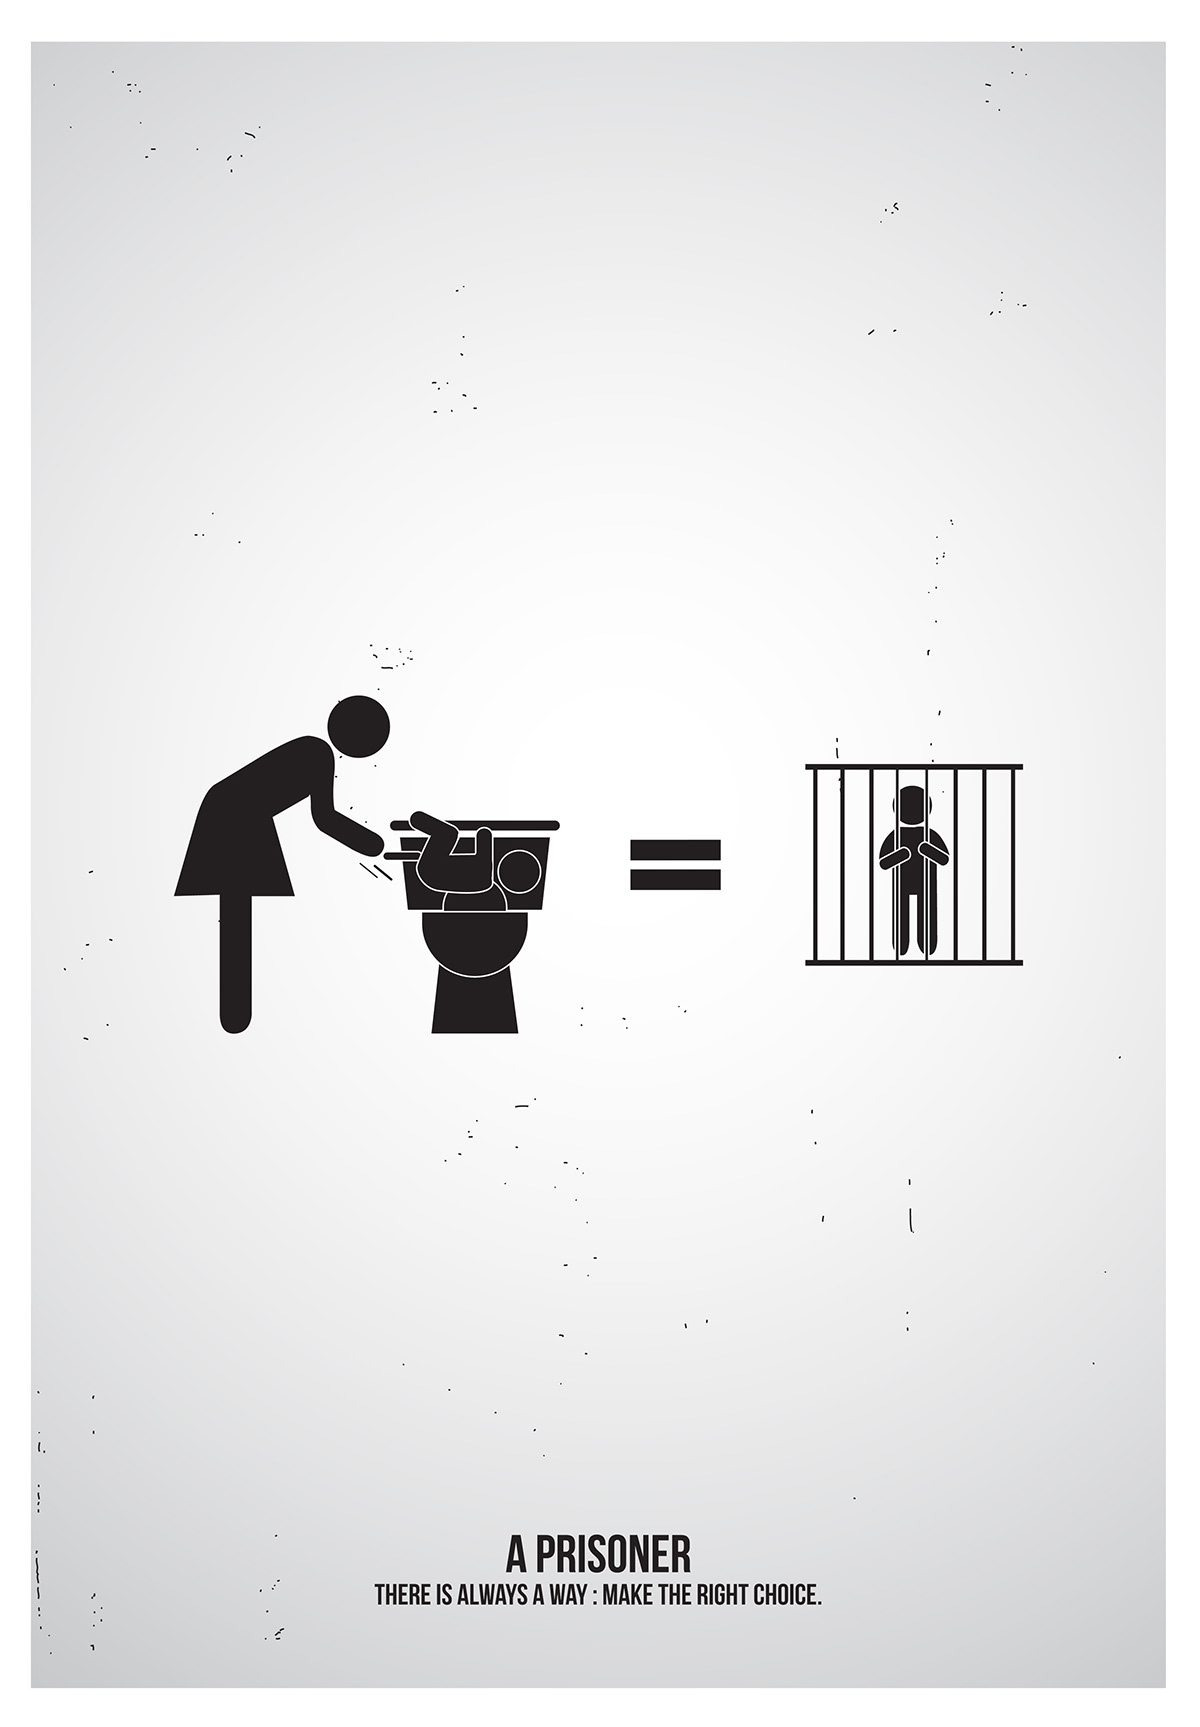 baby dumping murderer criminal prisioner campaign Public Service Awareness pictogram simple storyboard TV Commercial